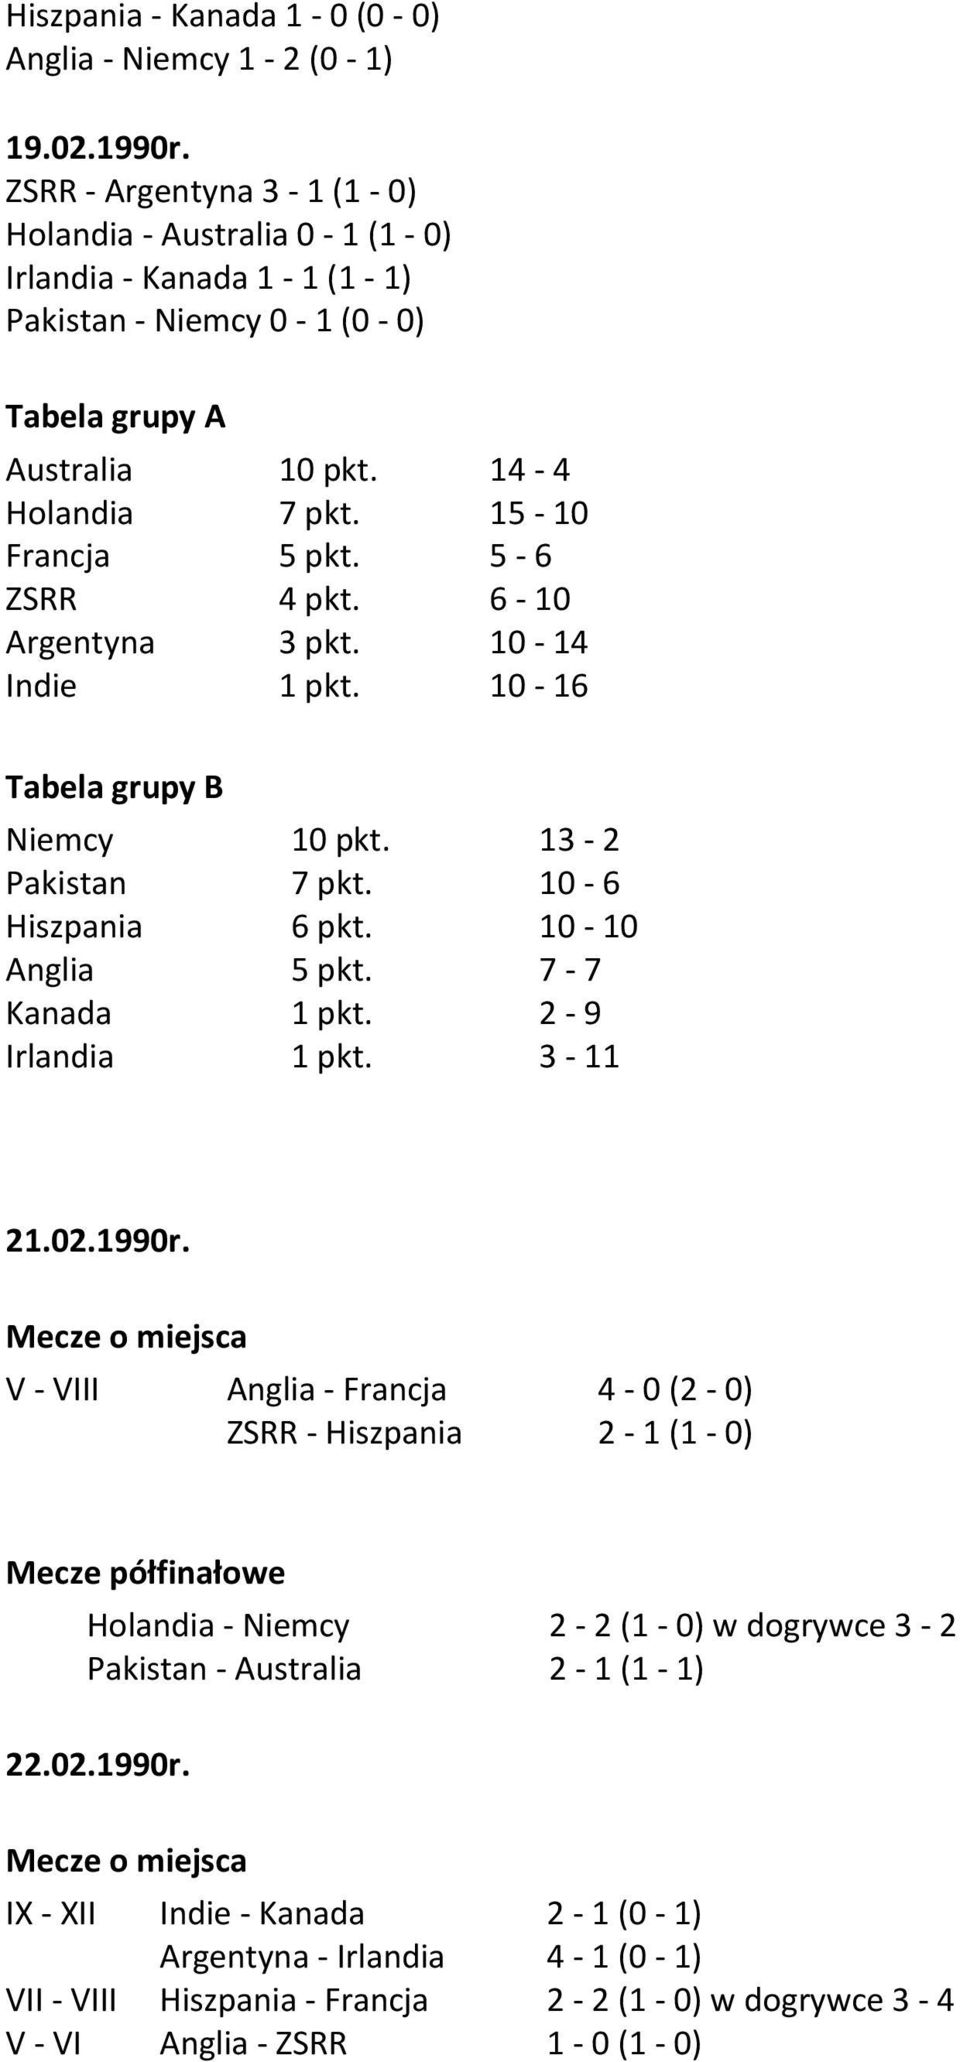 4 pkt. 3 pkt. 1 pkt. 14-4 15-10 5-6 6-10 10-14 10-16 Tabela grupy B Niemcy Pakistan Hiszpania Anglia Kanada Irlandia 10 pkt. 7 pkt. 6 pkt. 5 pkt. 1 pkt. 1 pkt. 13-2 10-6 10-10 7-7 2-9 3-11 21.02.